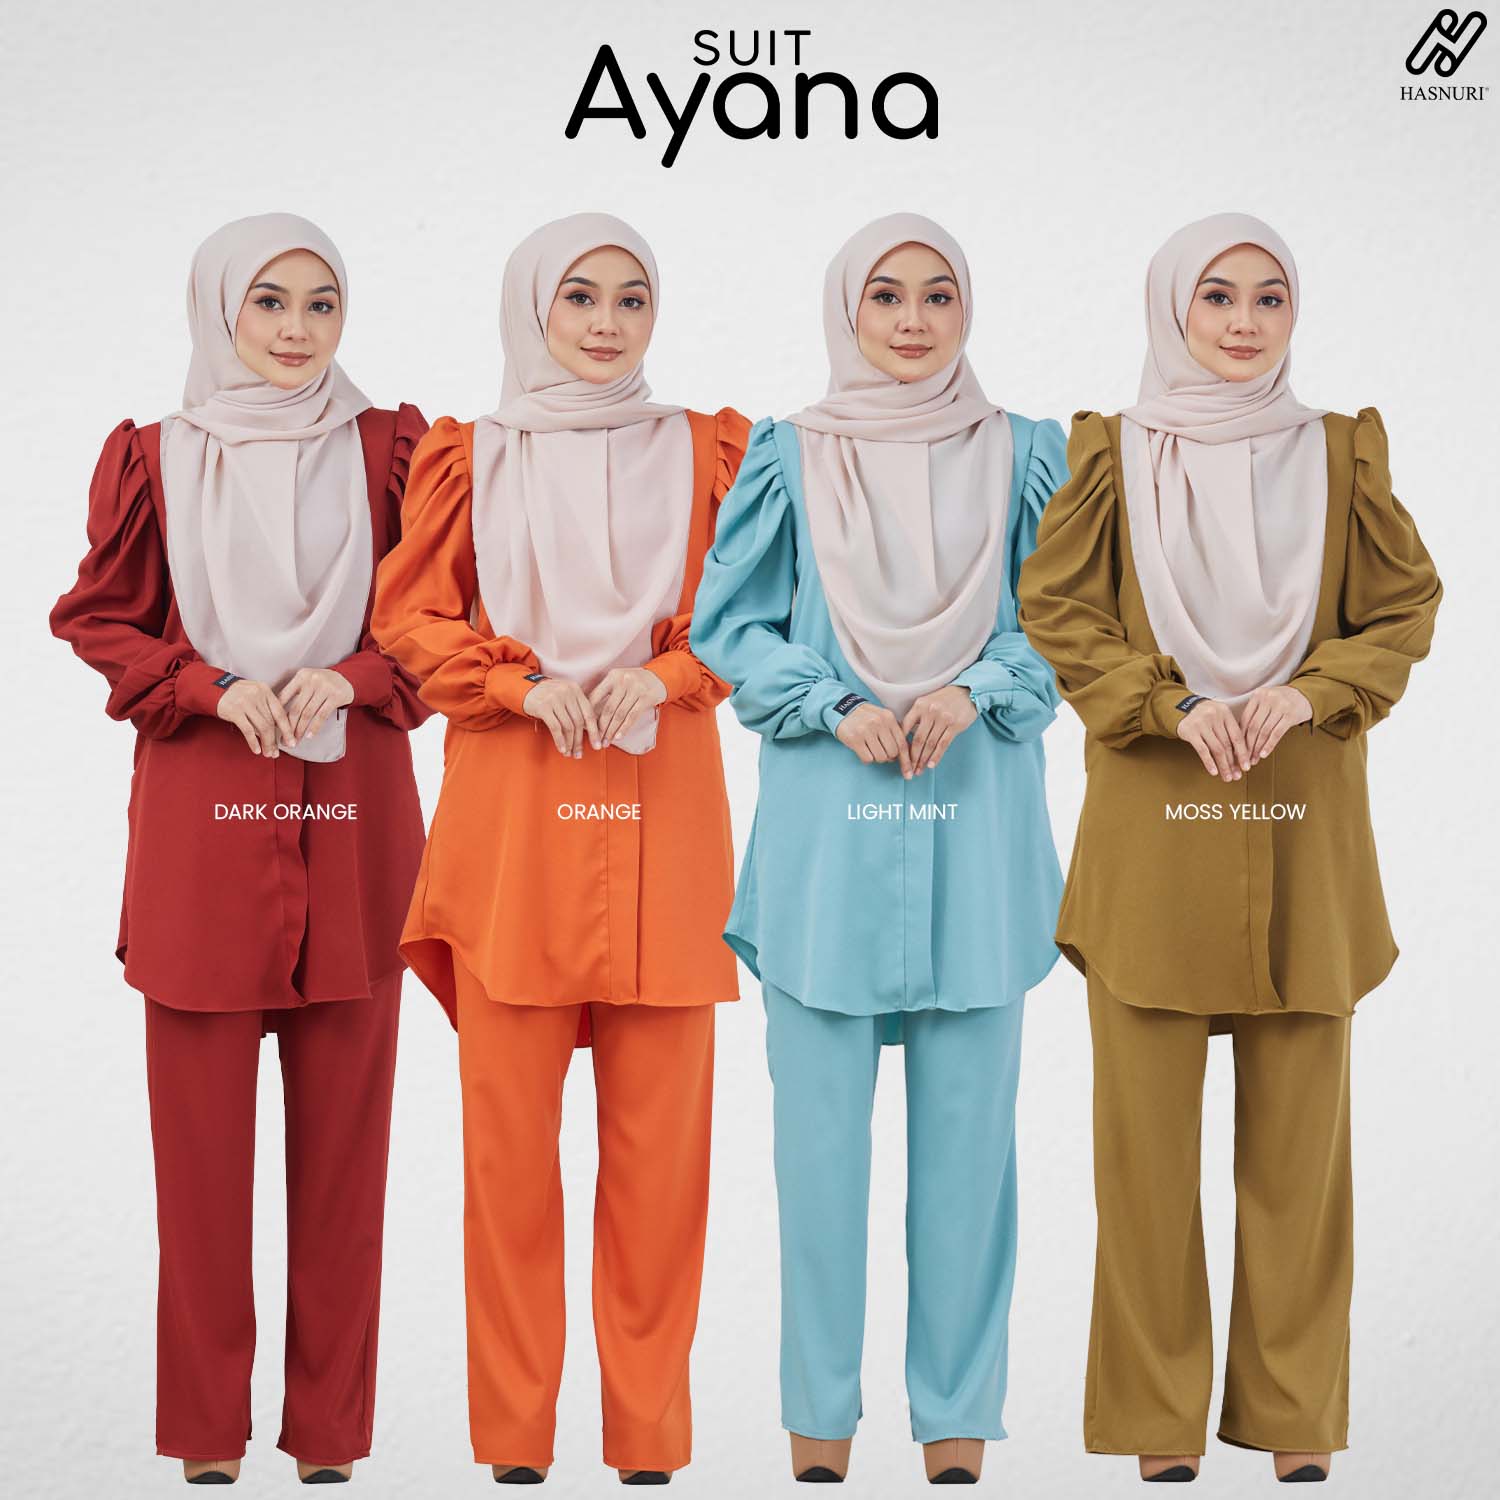 Suit Ayana - Moss Yellow